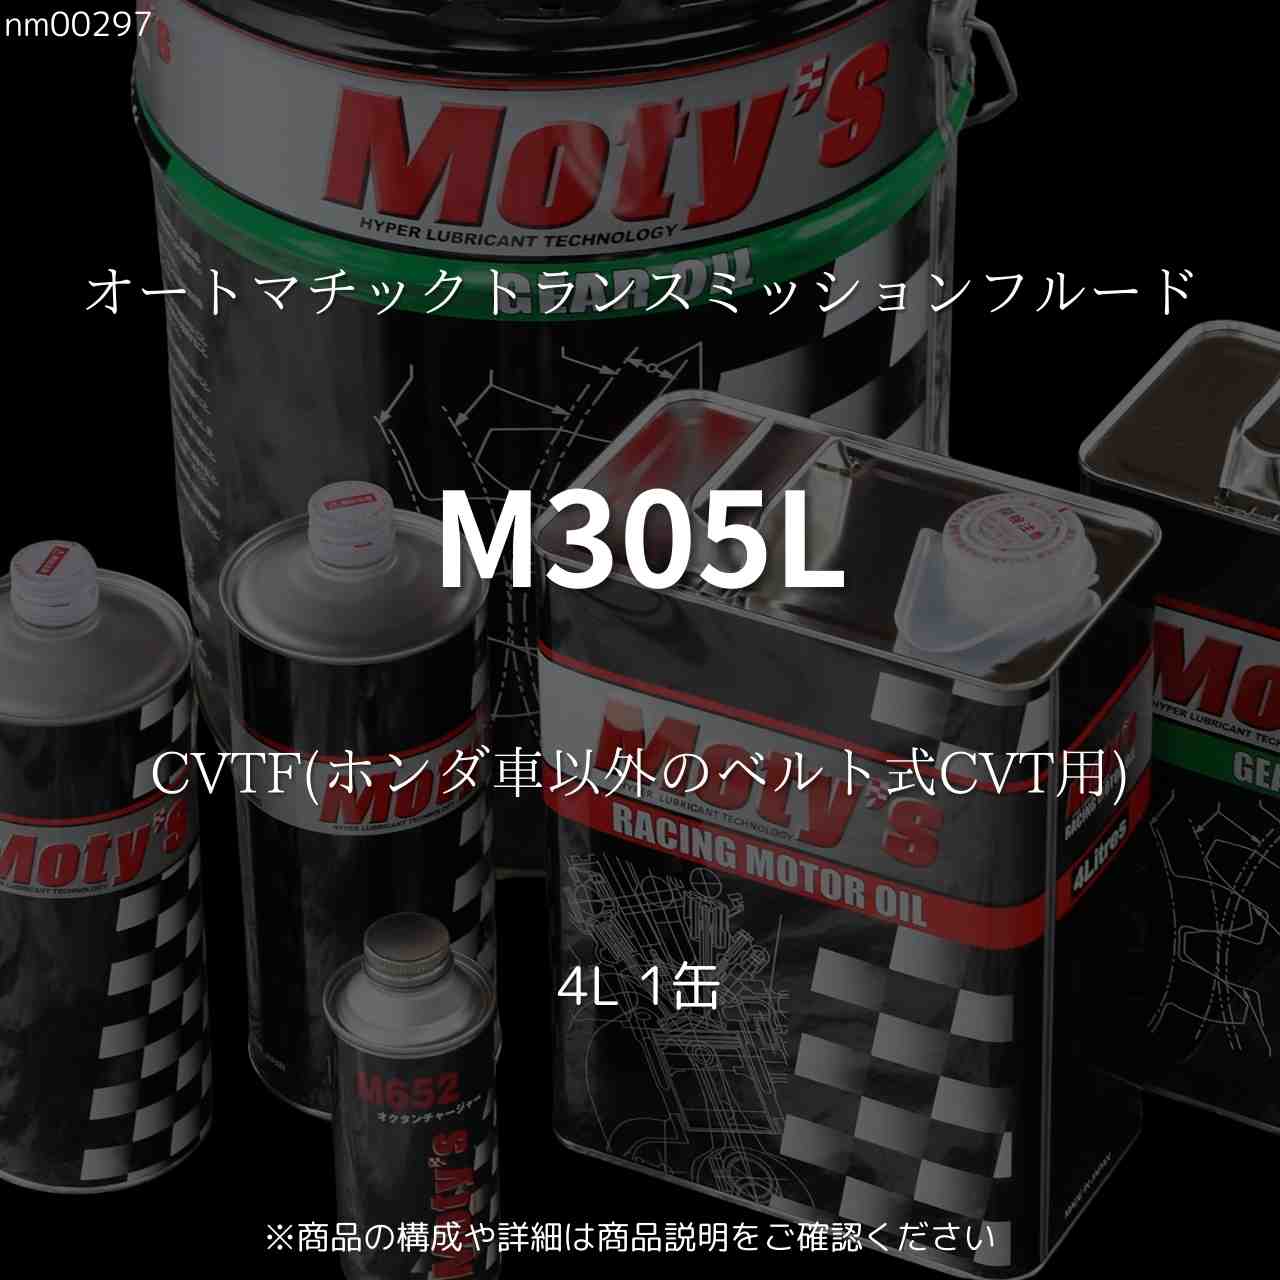 M305L CVTF(ホンダ車以外のベルト式CVT用) 4L 1缶 オートマチックトランスミッションフルード モティーズ Moty's